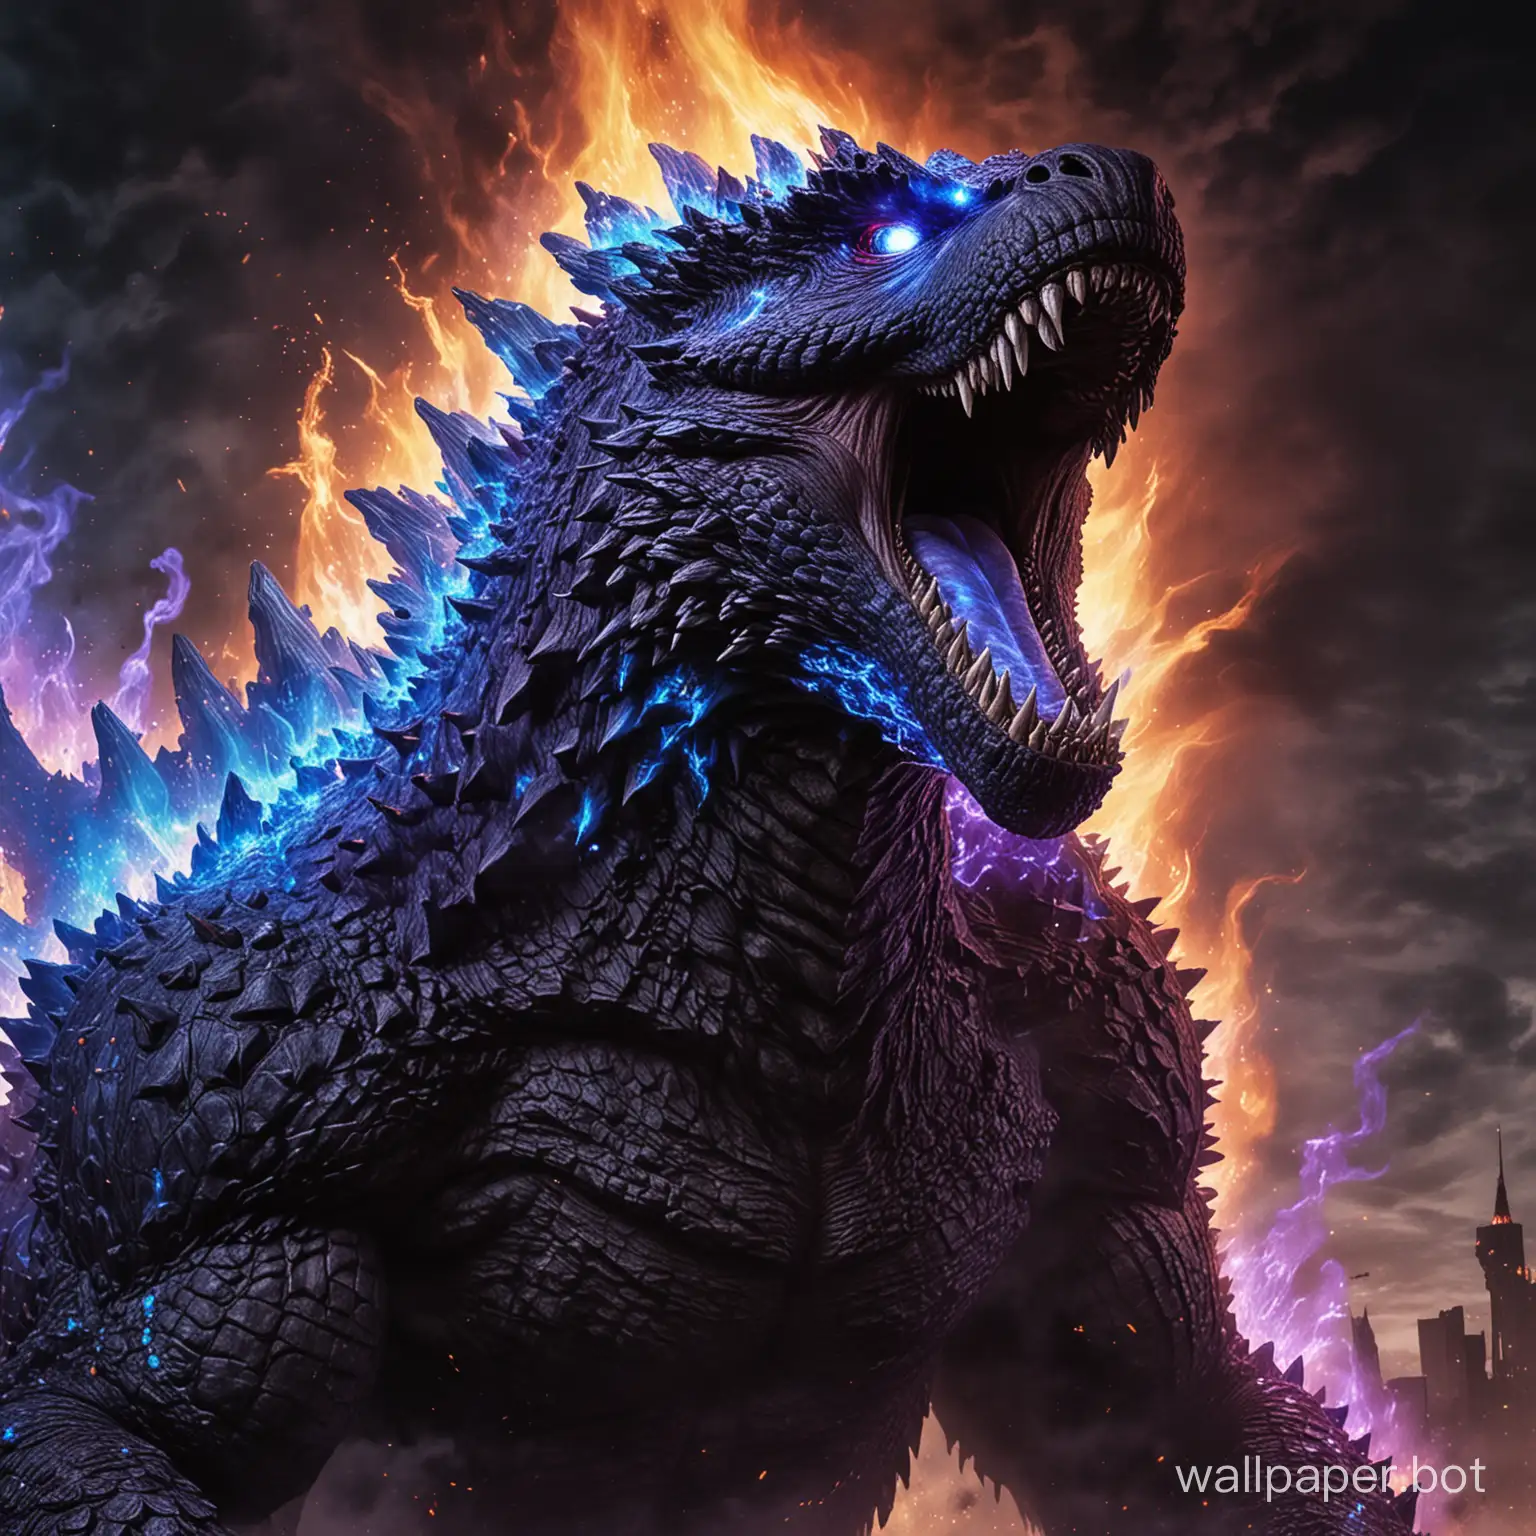 Giant-Dark-Purple-Godzilla-Emitting-Blue-Flames